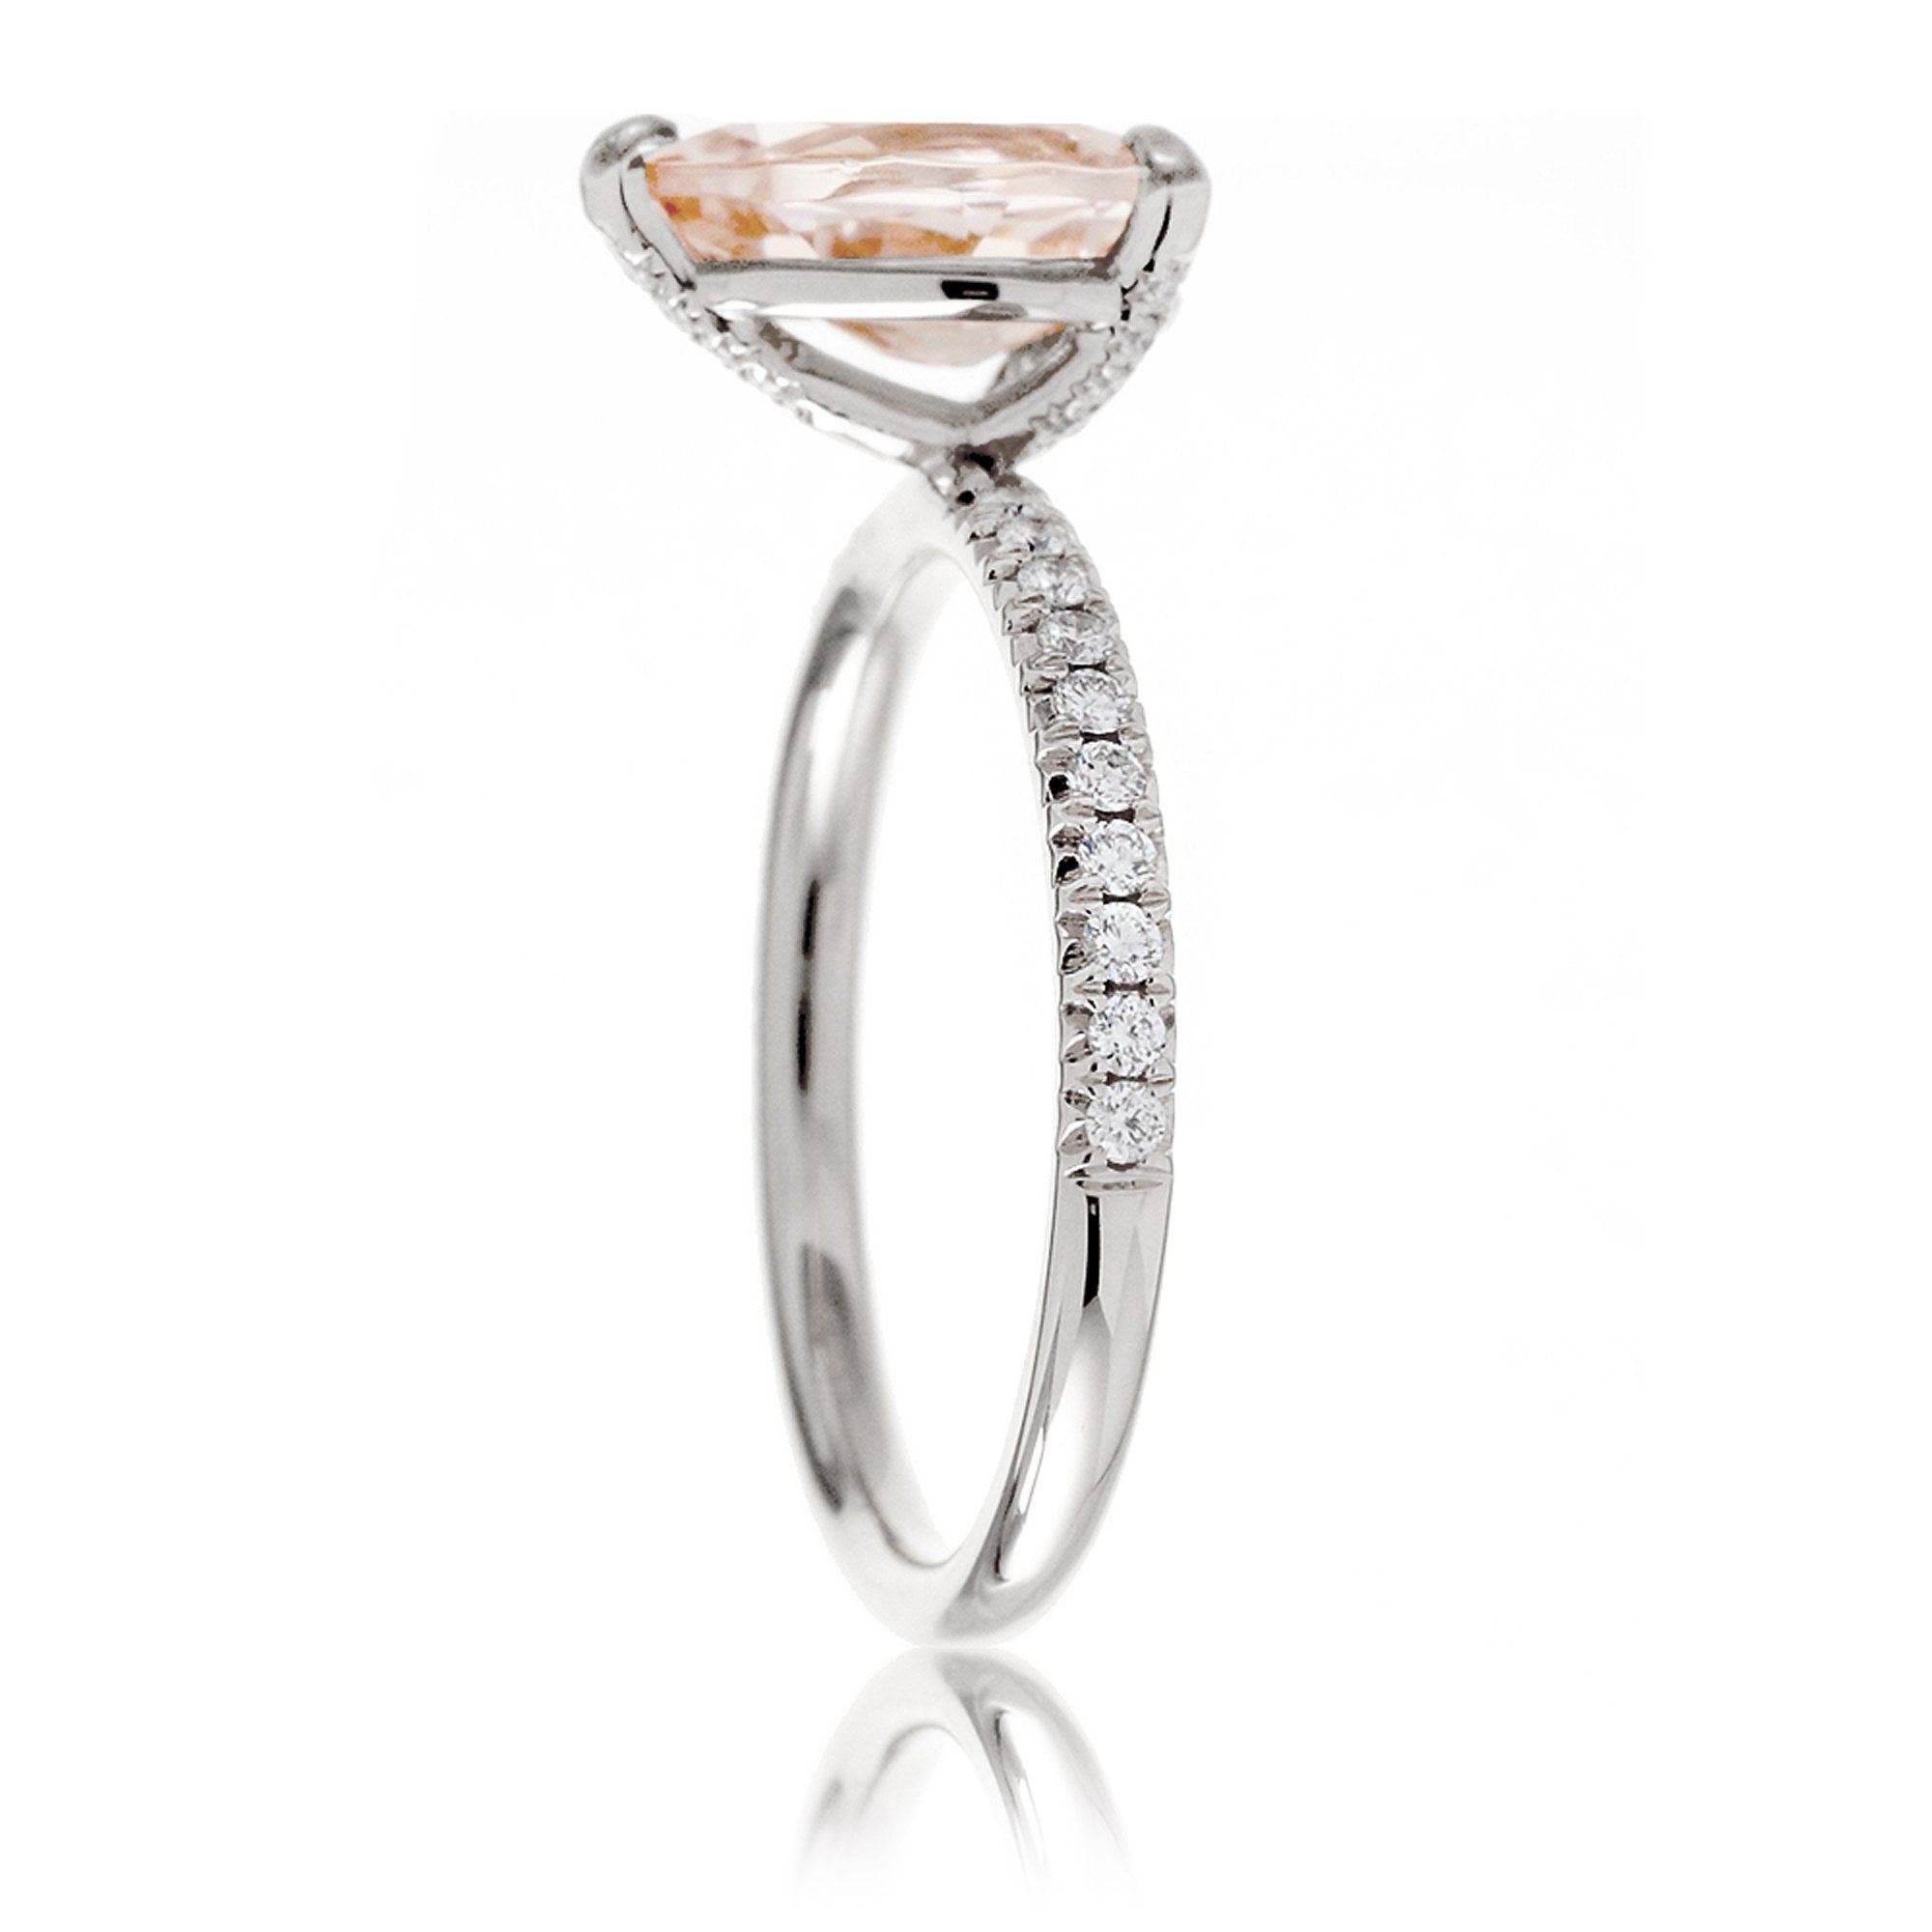 Pear morganite diamond band engagement ring white gold - The Ava